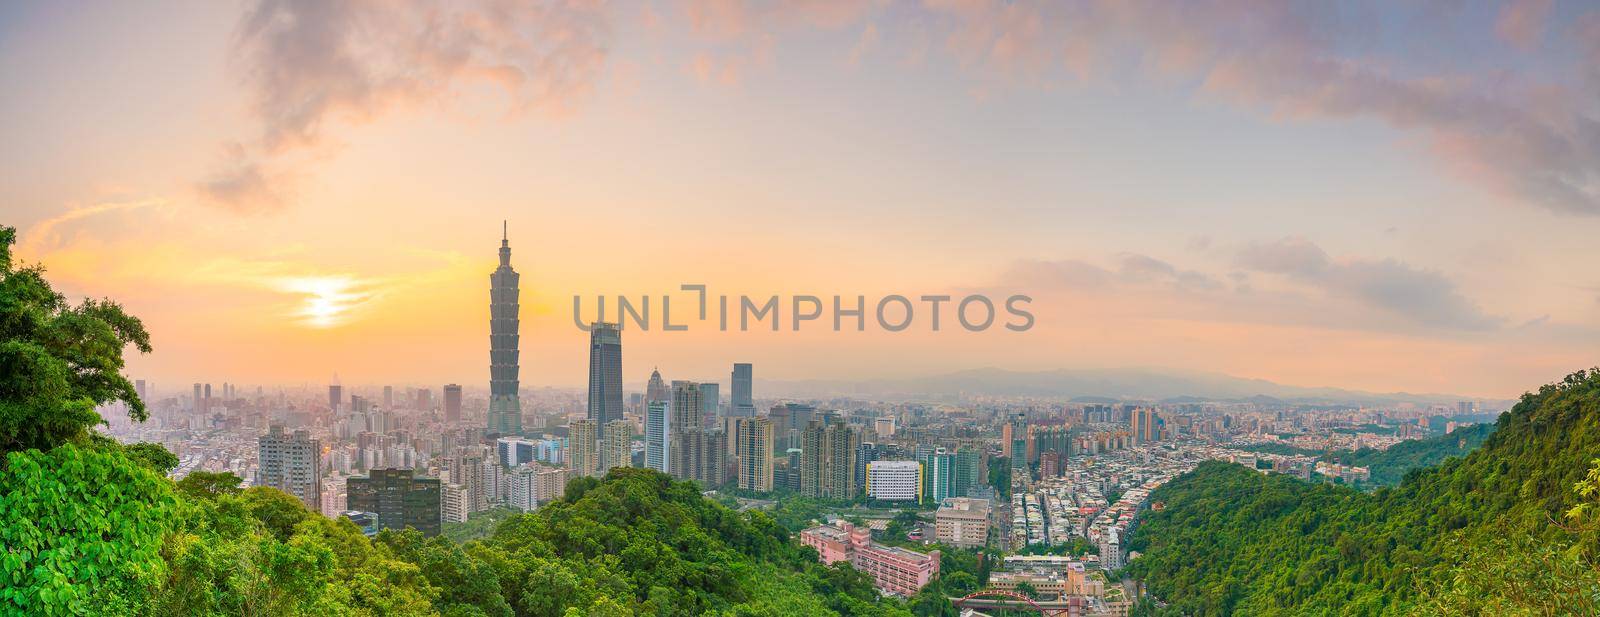 City of Taipei skyline at twilight in Taiwan